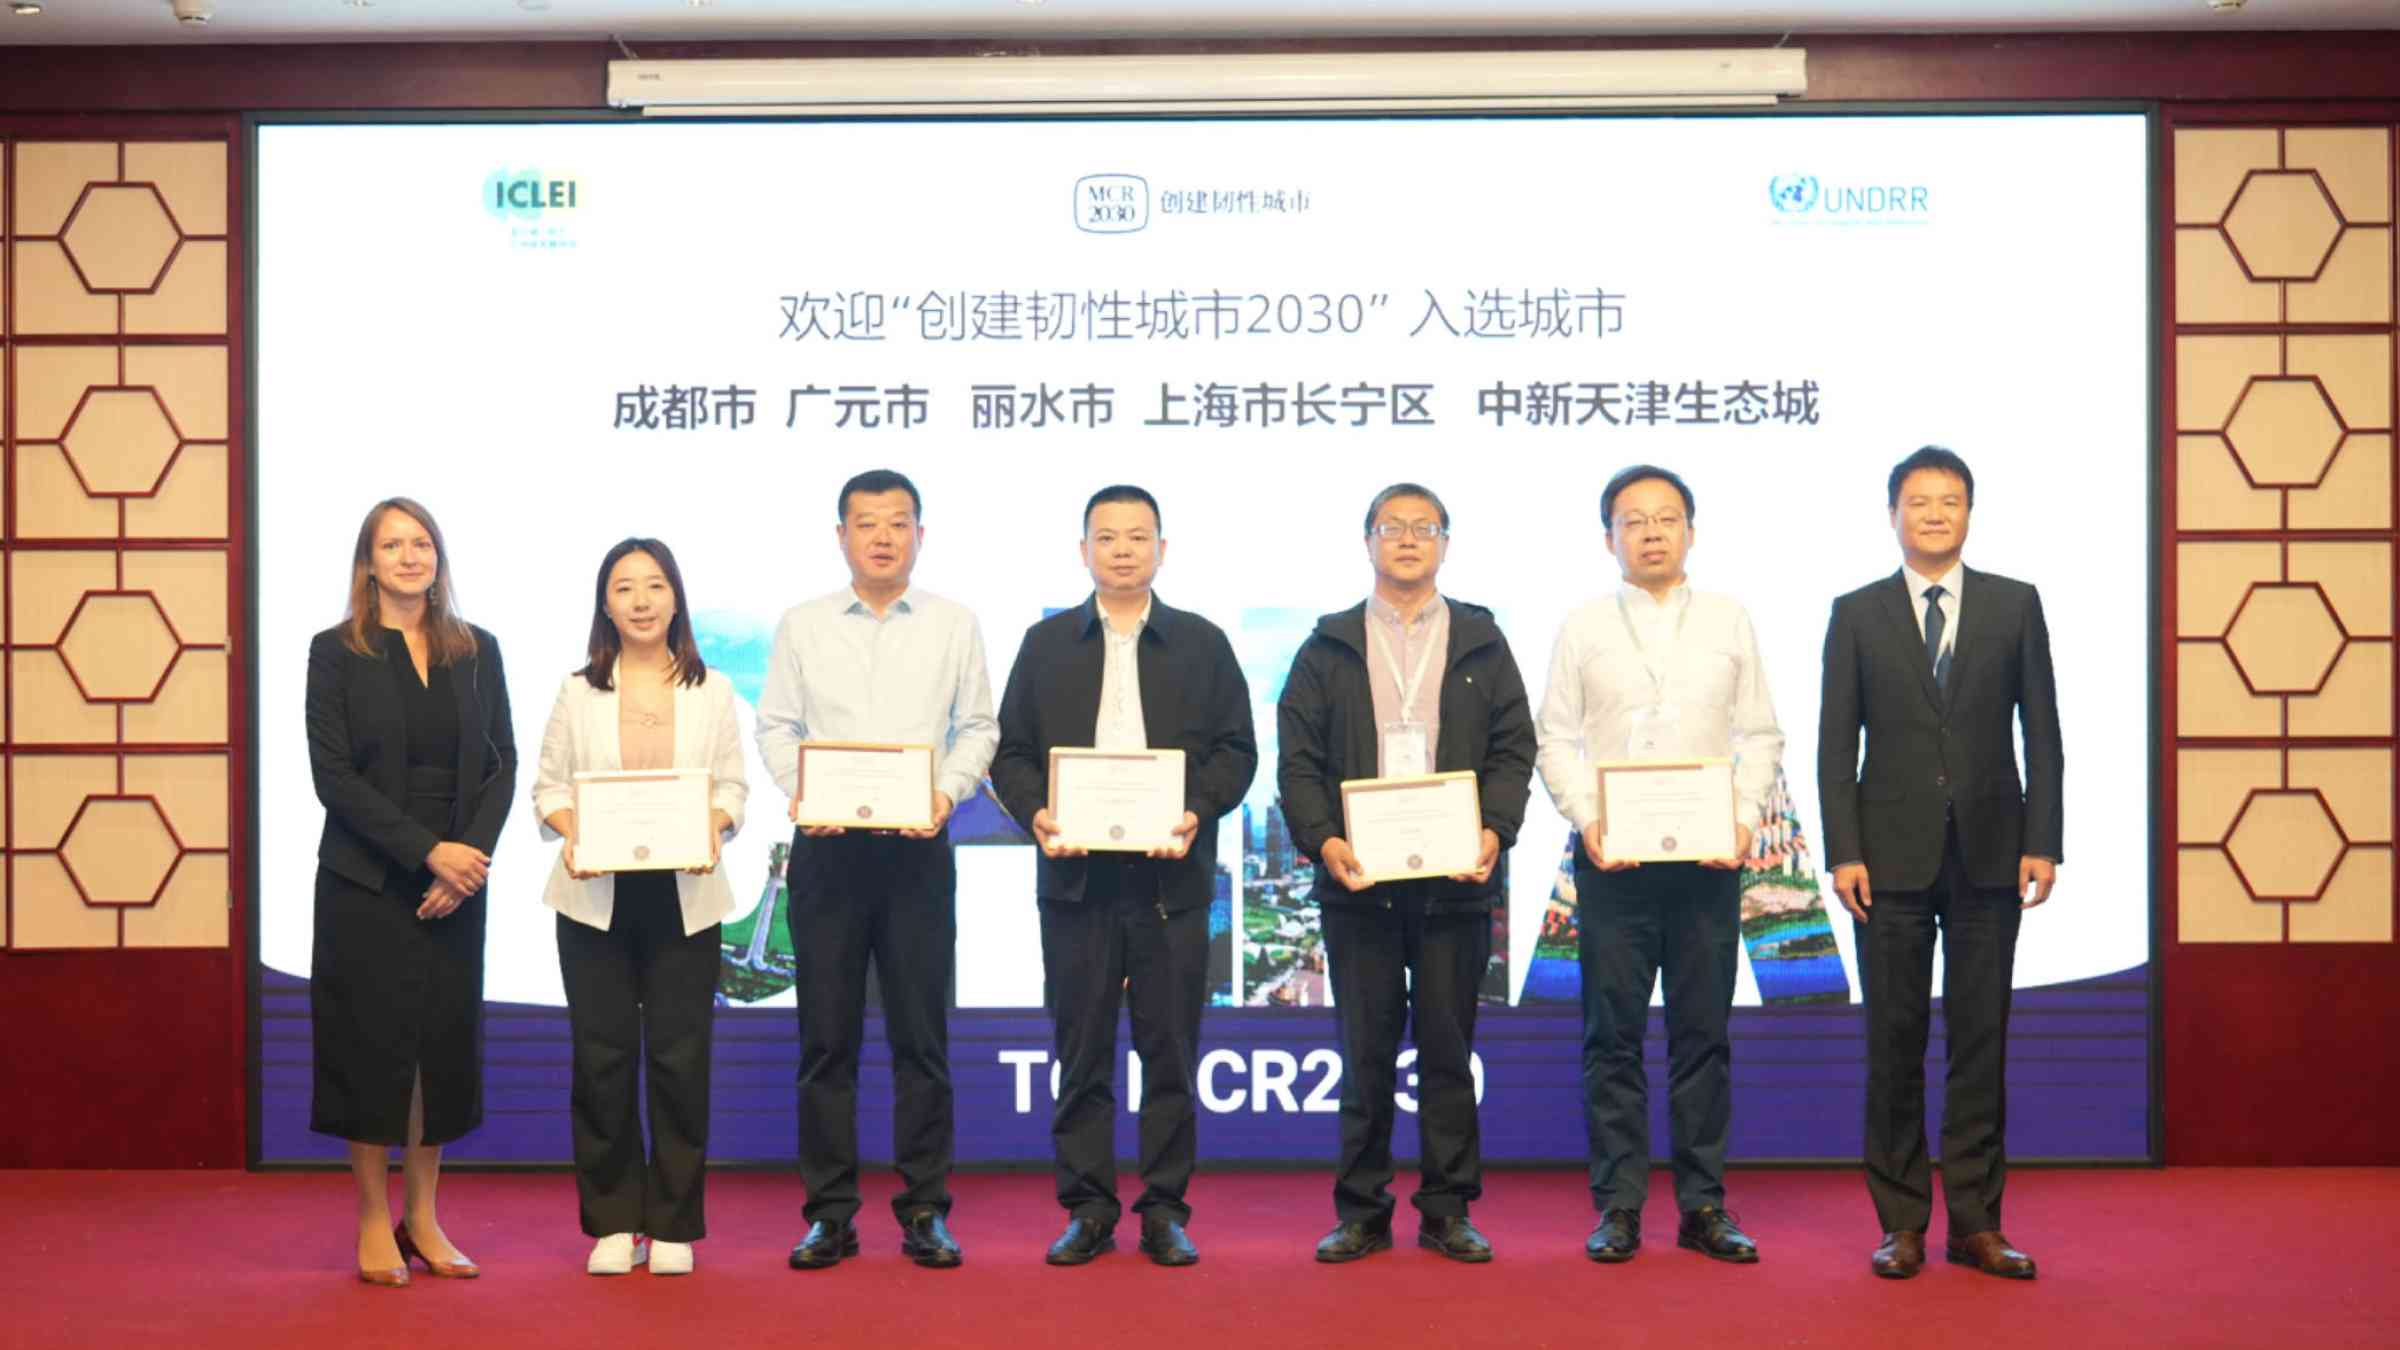 Certificate ceremony MCR2030 Chinese cities